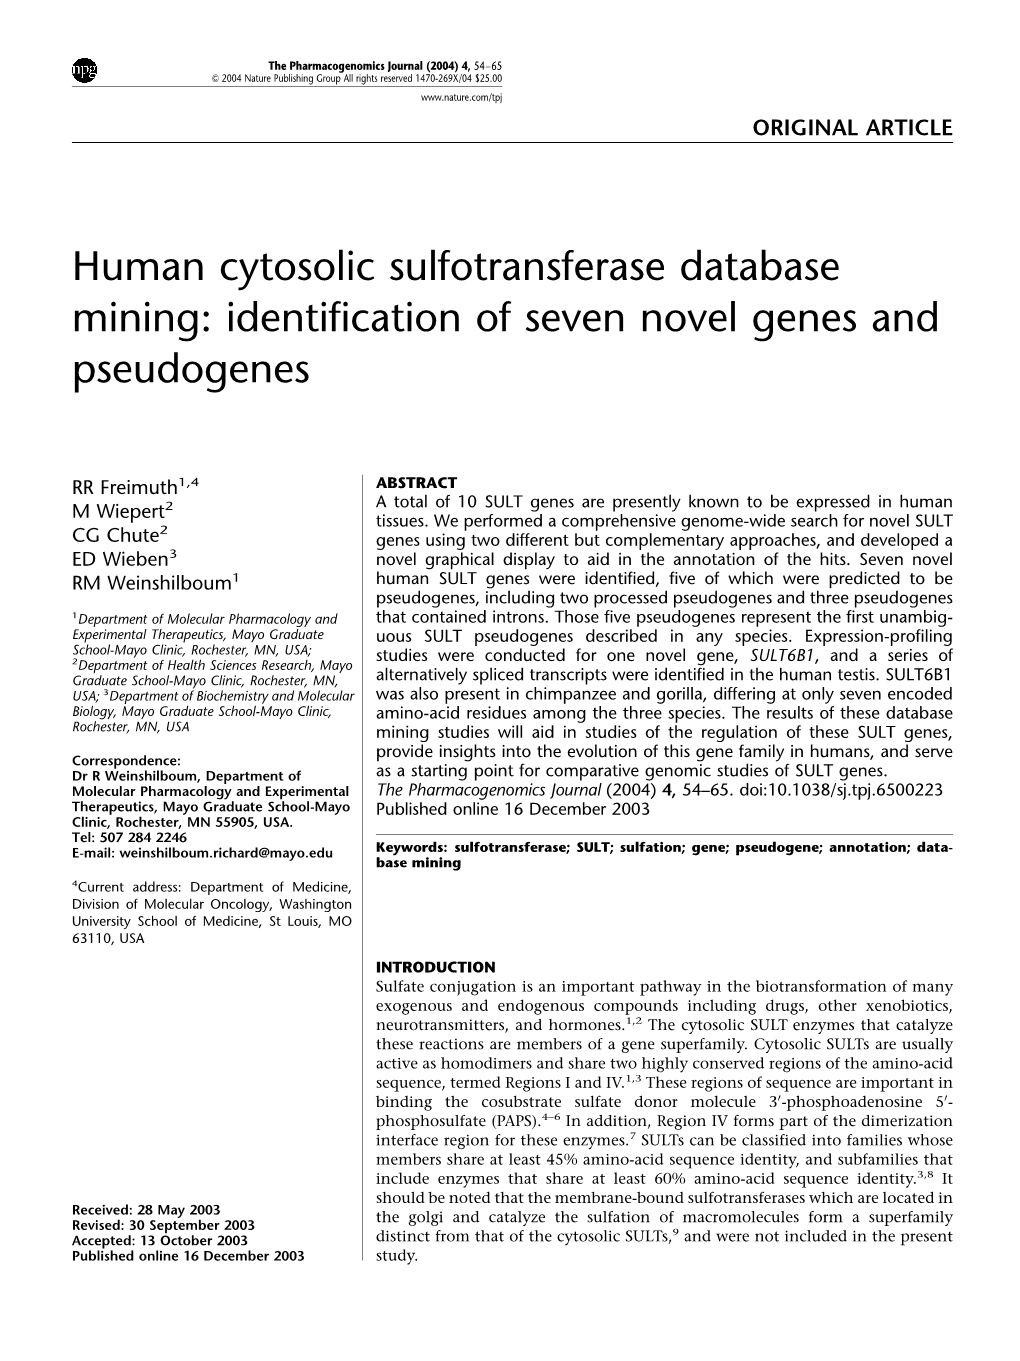 Identification of Seven Novel Genes and Pseudogenes